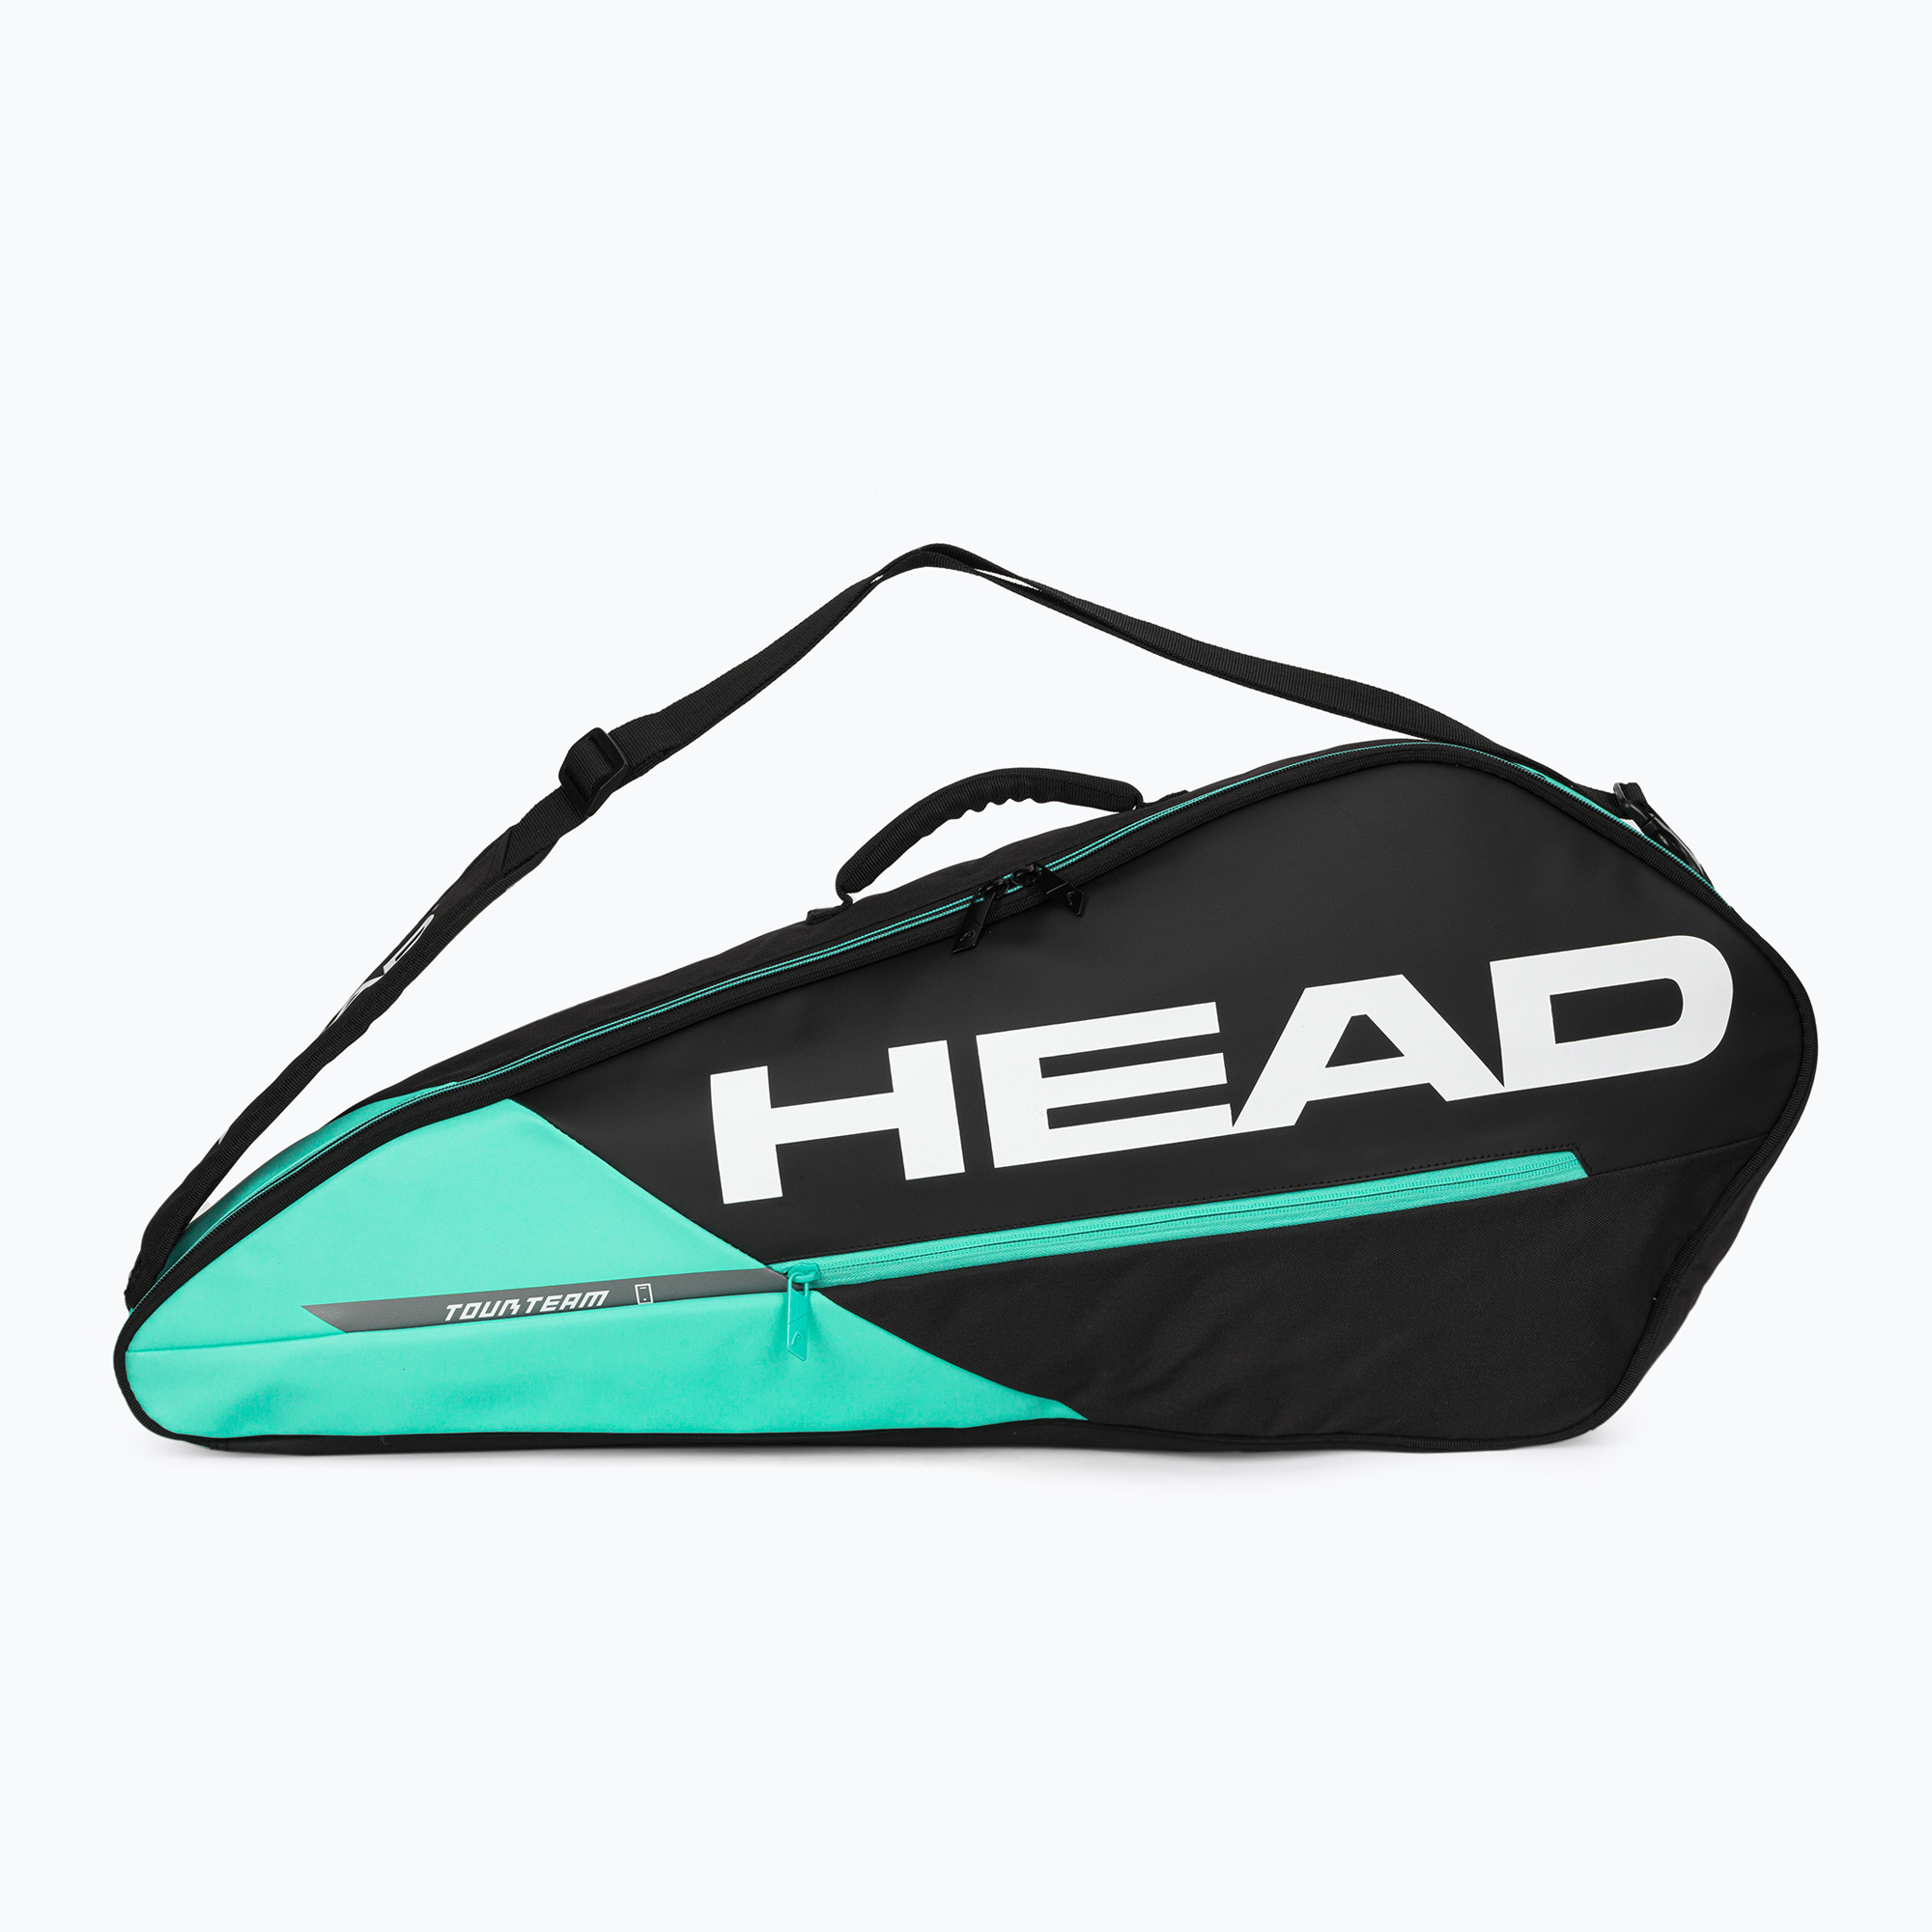 Tenisová taška HEAD Tour Team 3R 30 l black/blue 283502